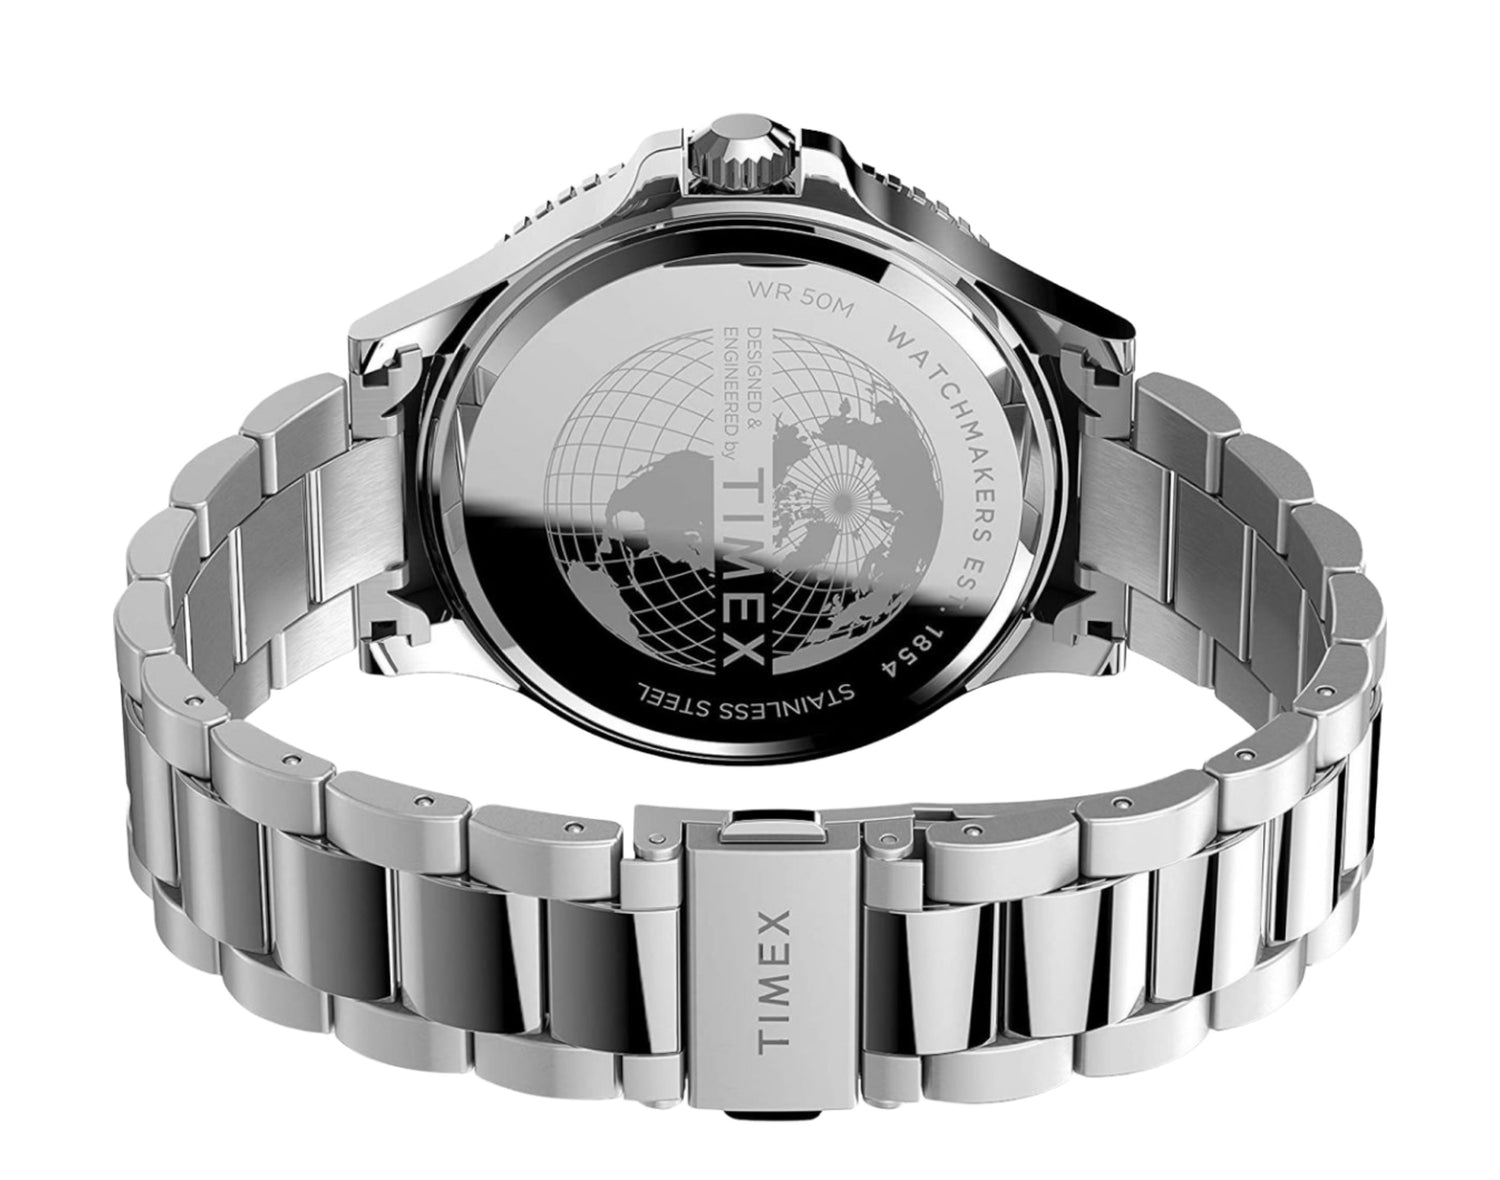 Timex Harborside Multifunction 43mm Stainless Steel Watch